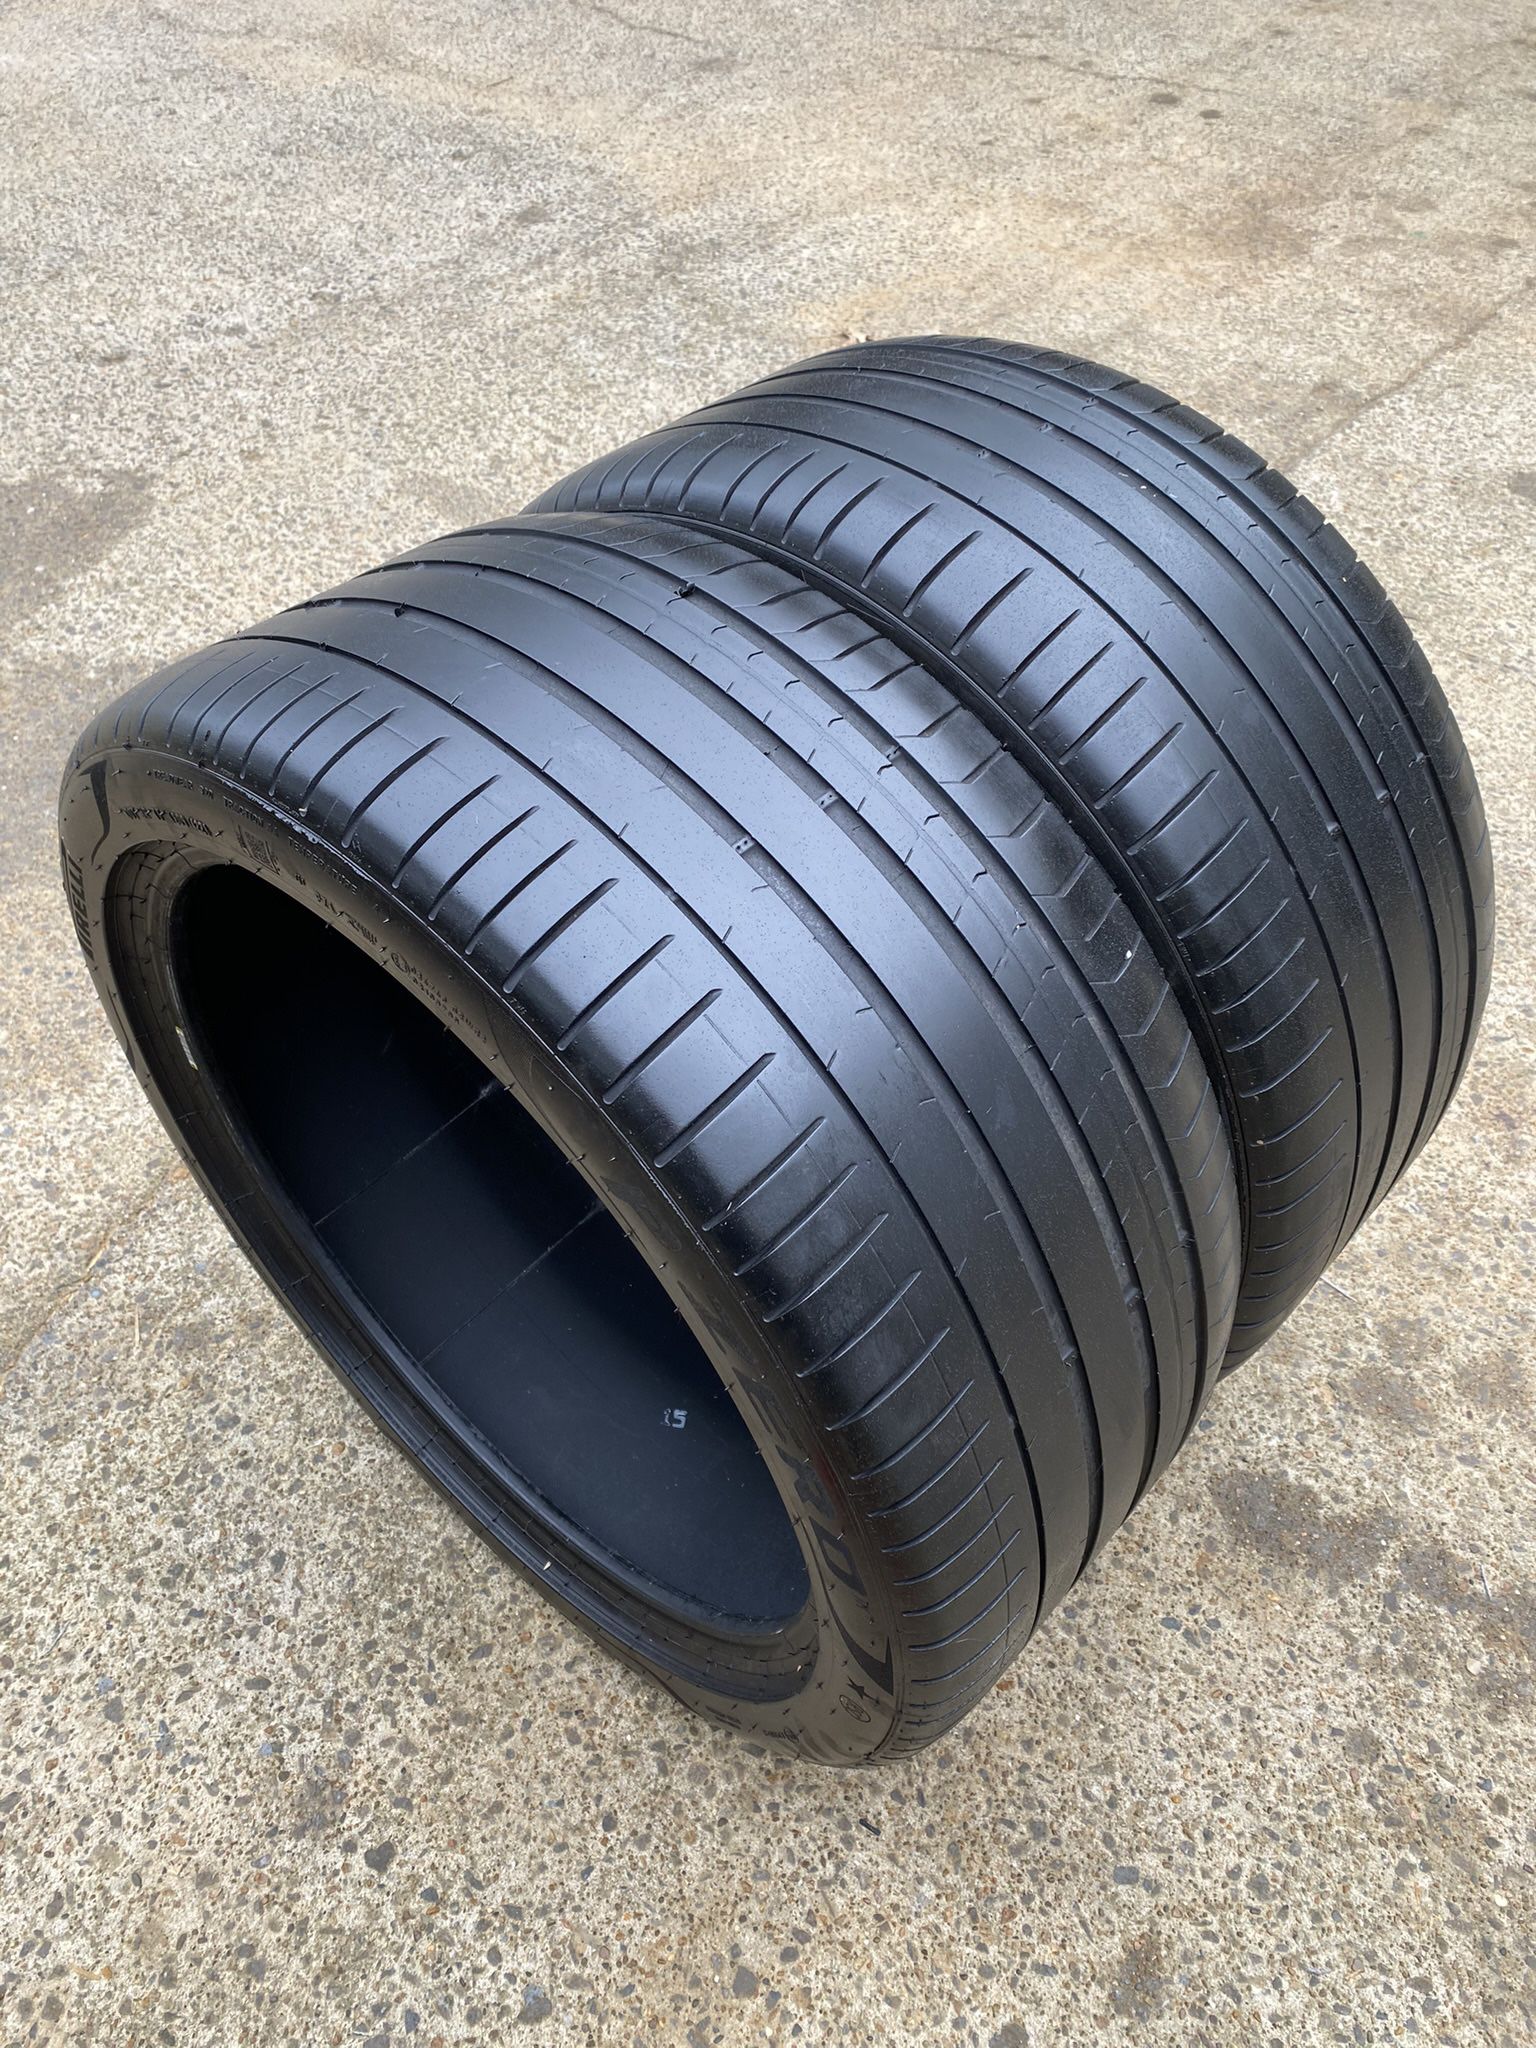 2 > 315-35-22 Pirelli Pzero Tires